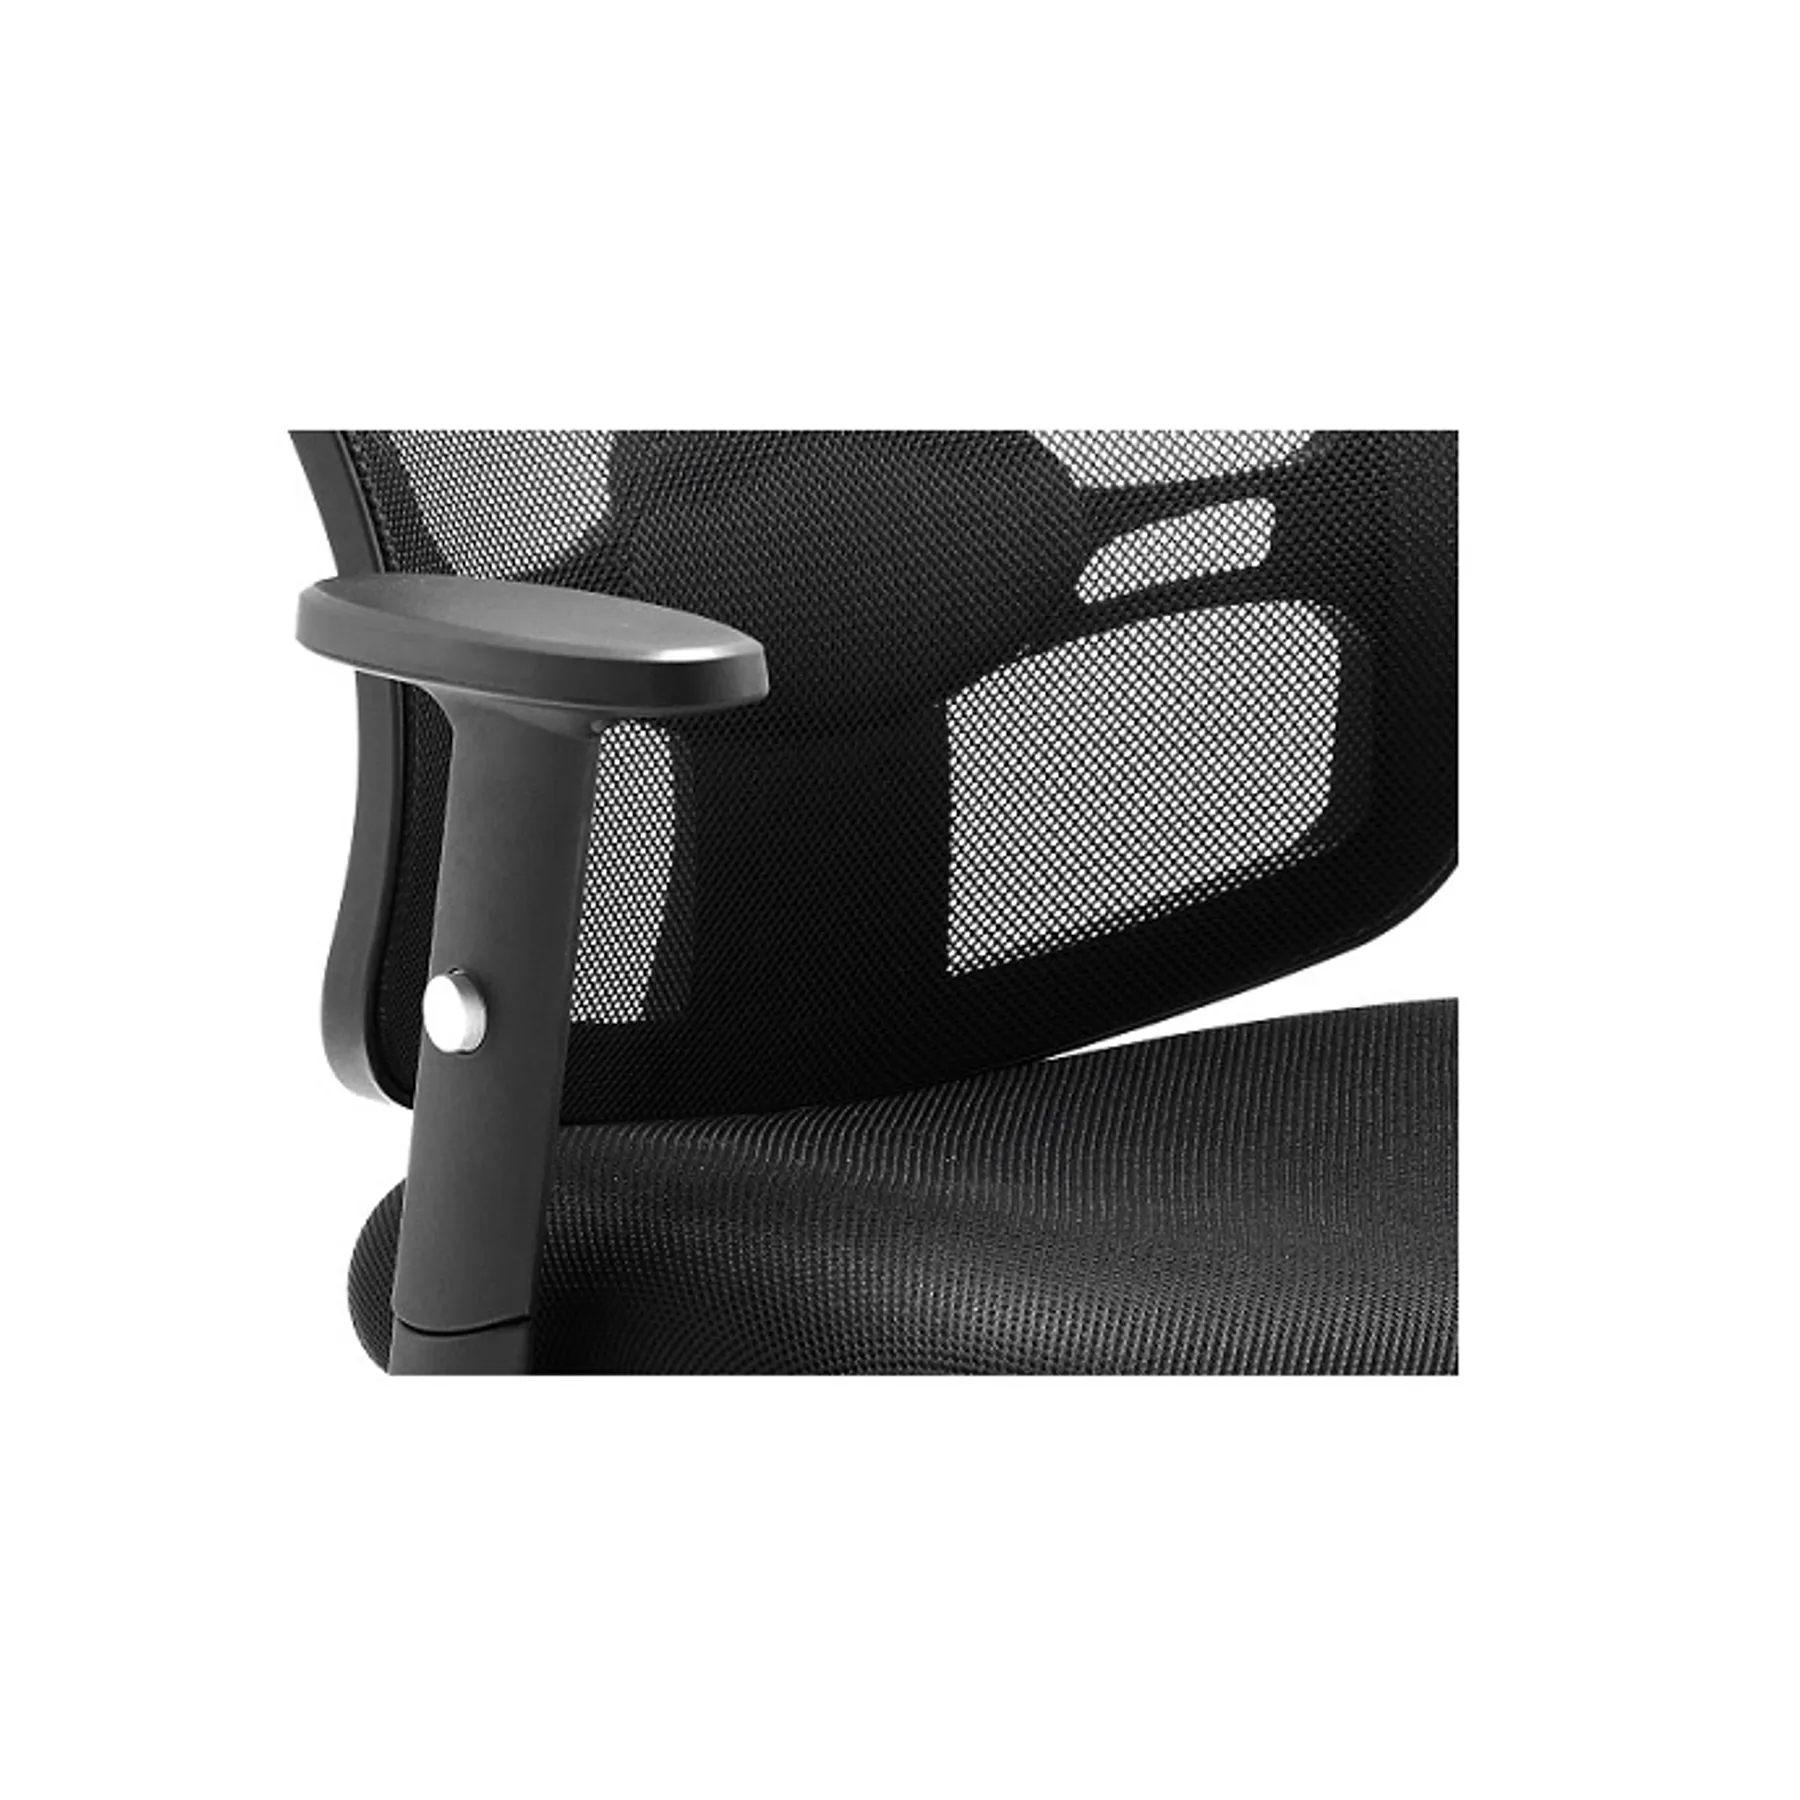 Lof Direct Dynamic portland mesh cantilever chair black EX000136 arm detail